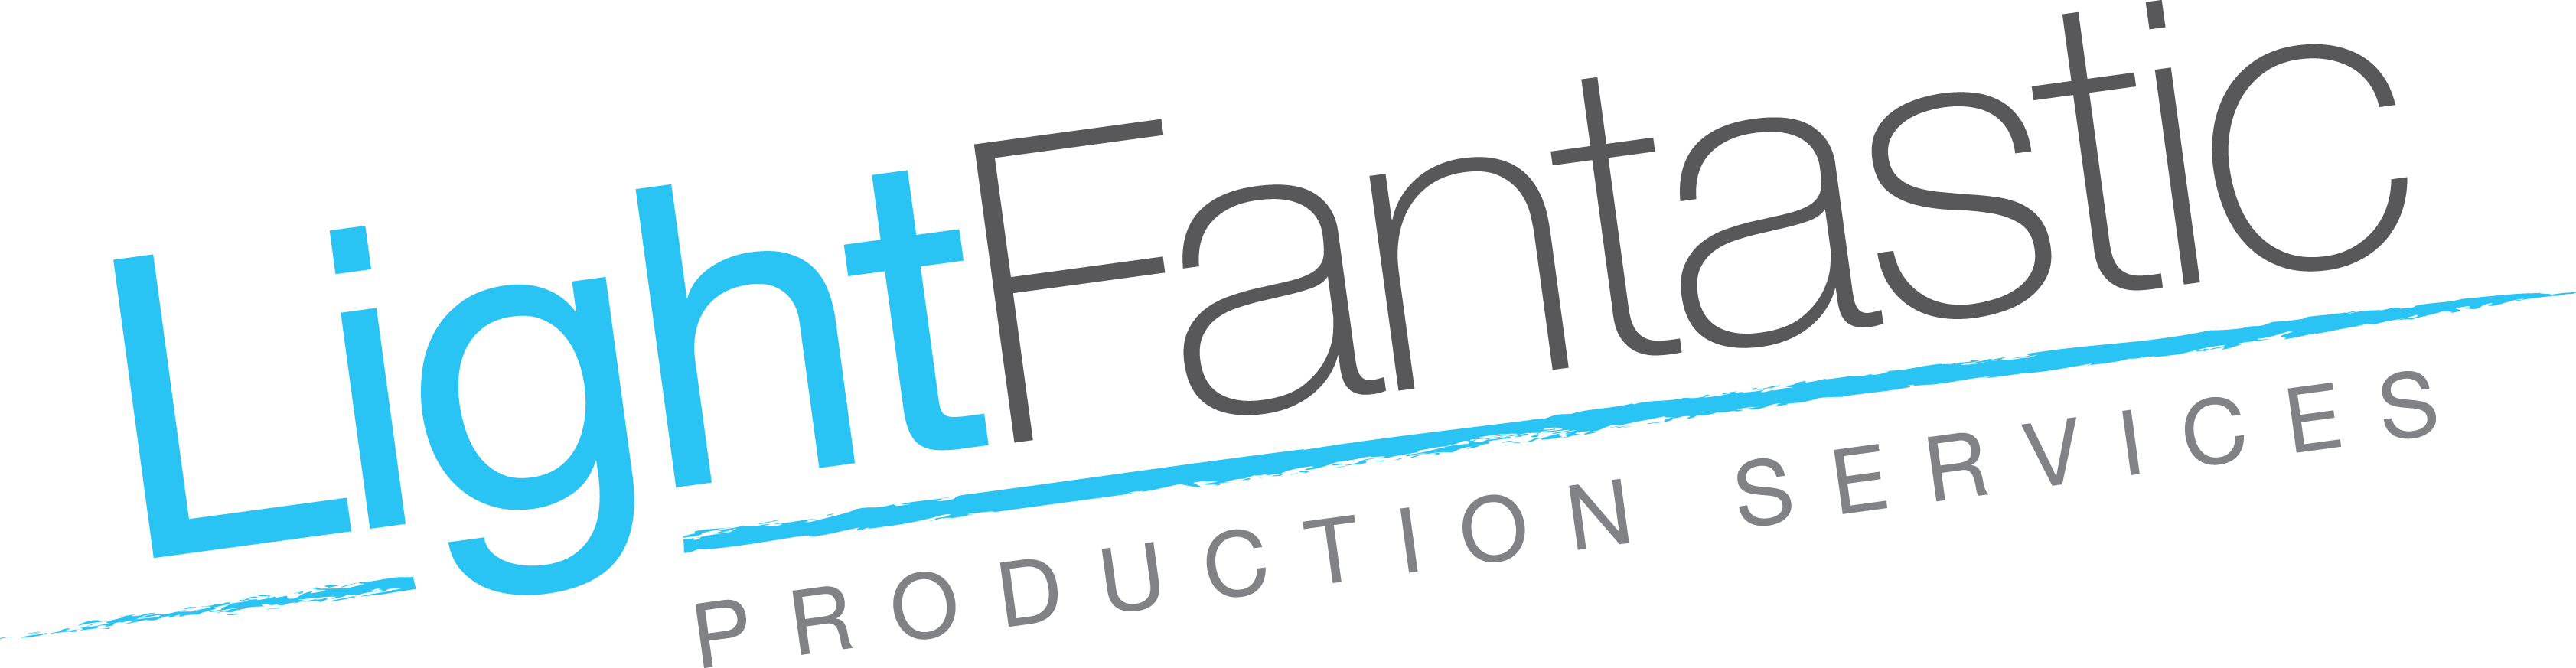 logo for Light Fantastic Production Services Ltd